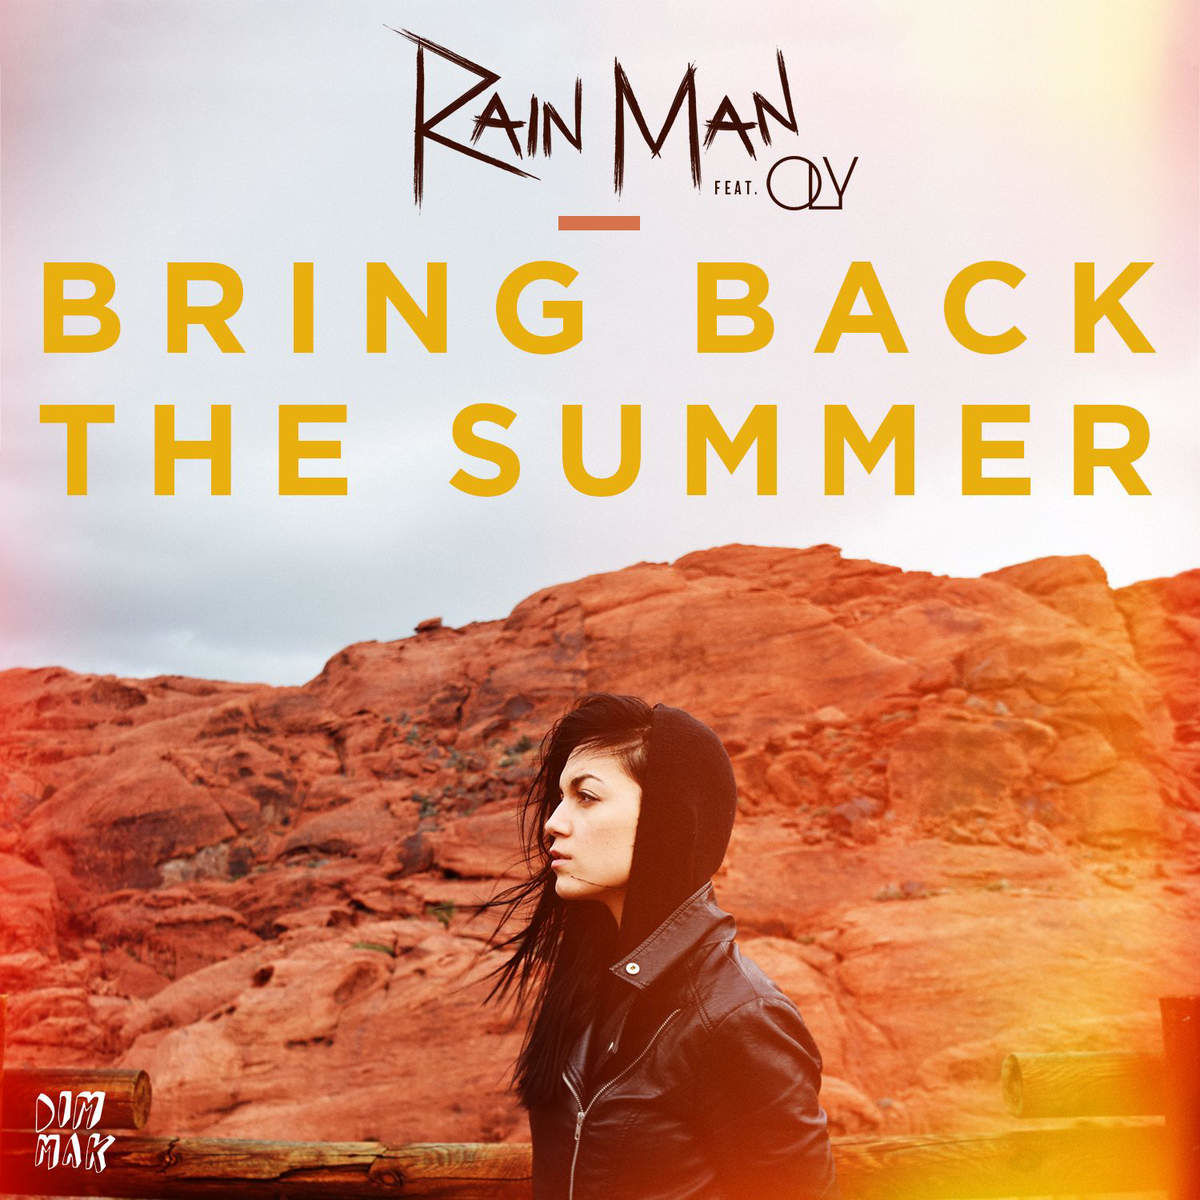 Rain Man - Bring Back The Summer (Ft. Oly) [클럽, 활기, 멜로딕]